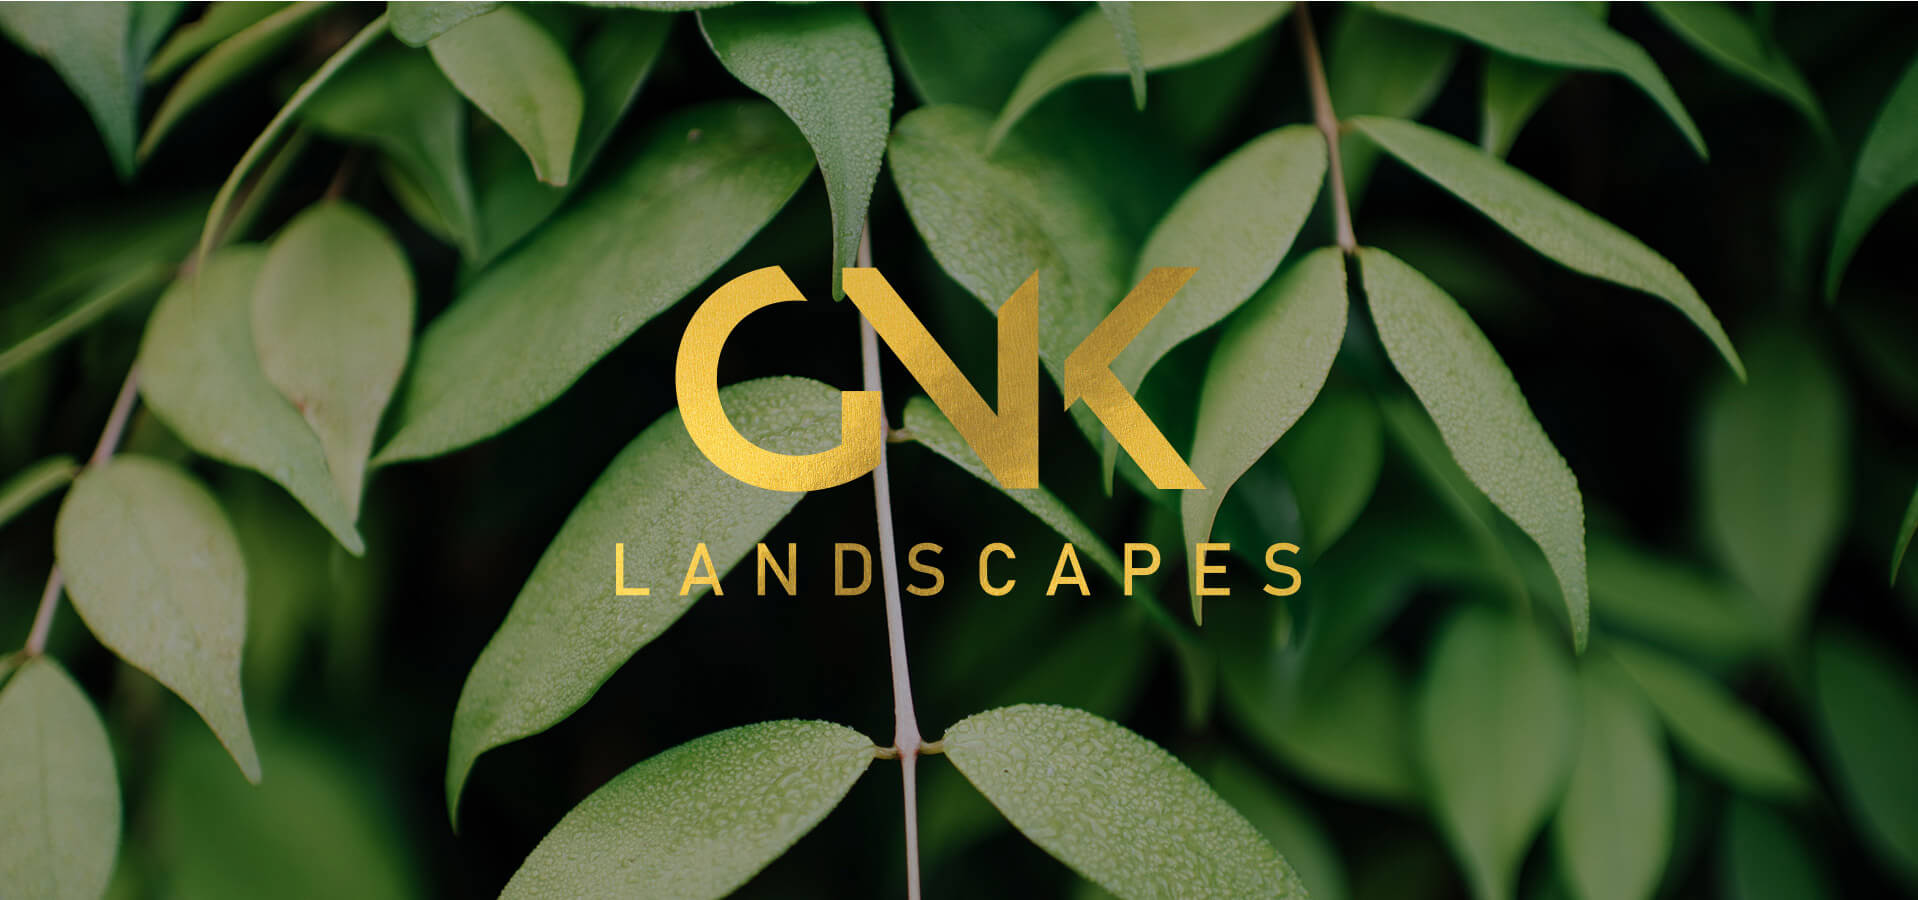 GNK Landscapes logo on foliage